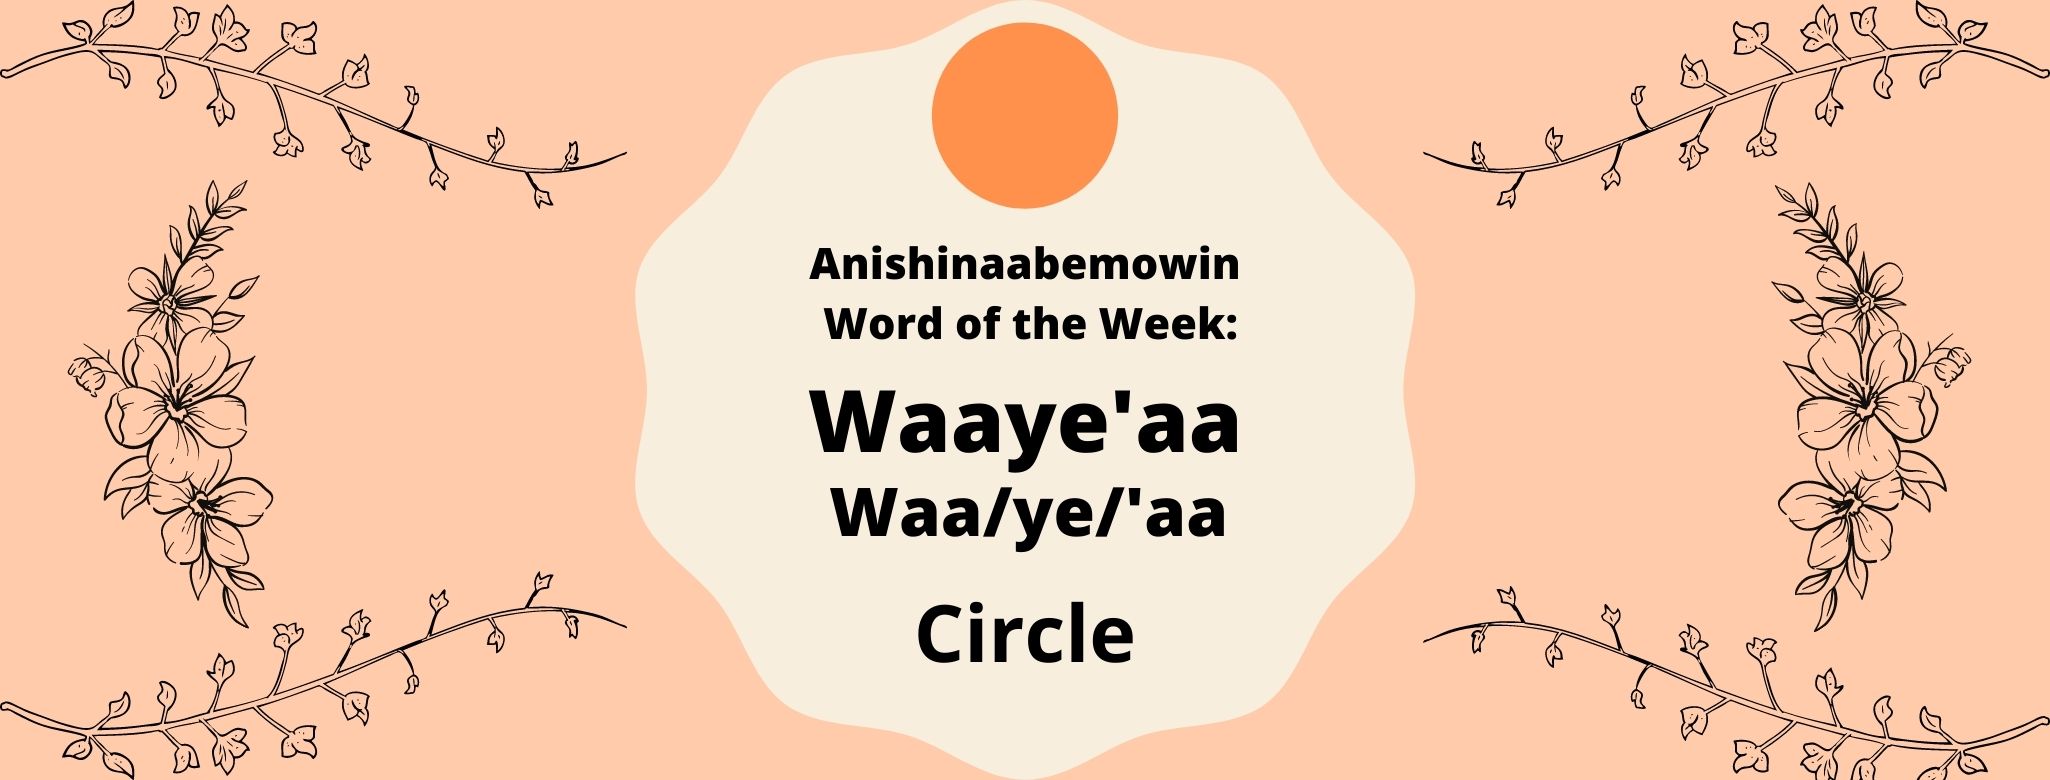 Anishinaabemowin Word of the Week Circle